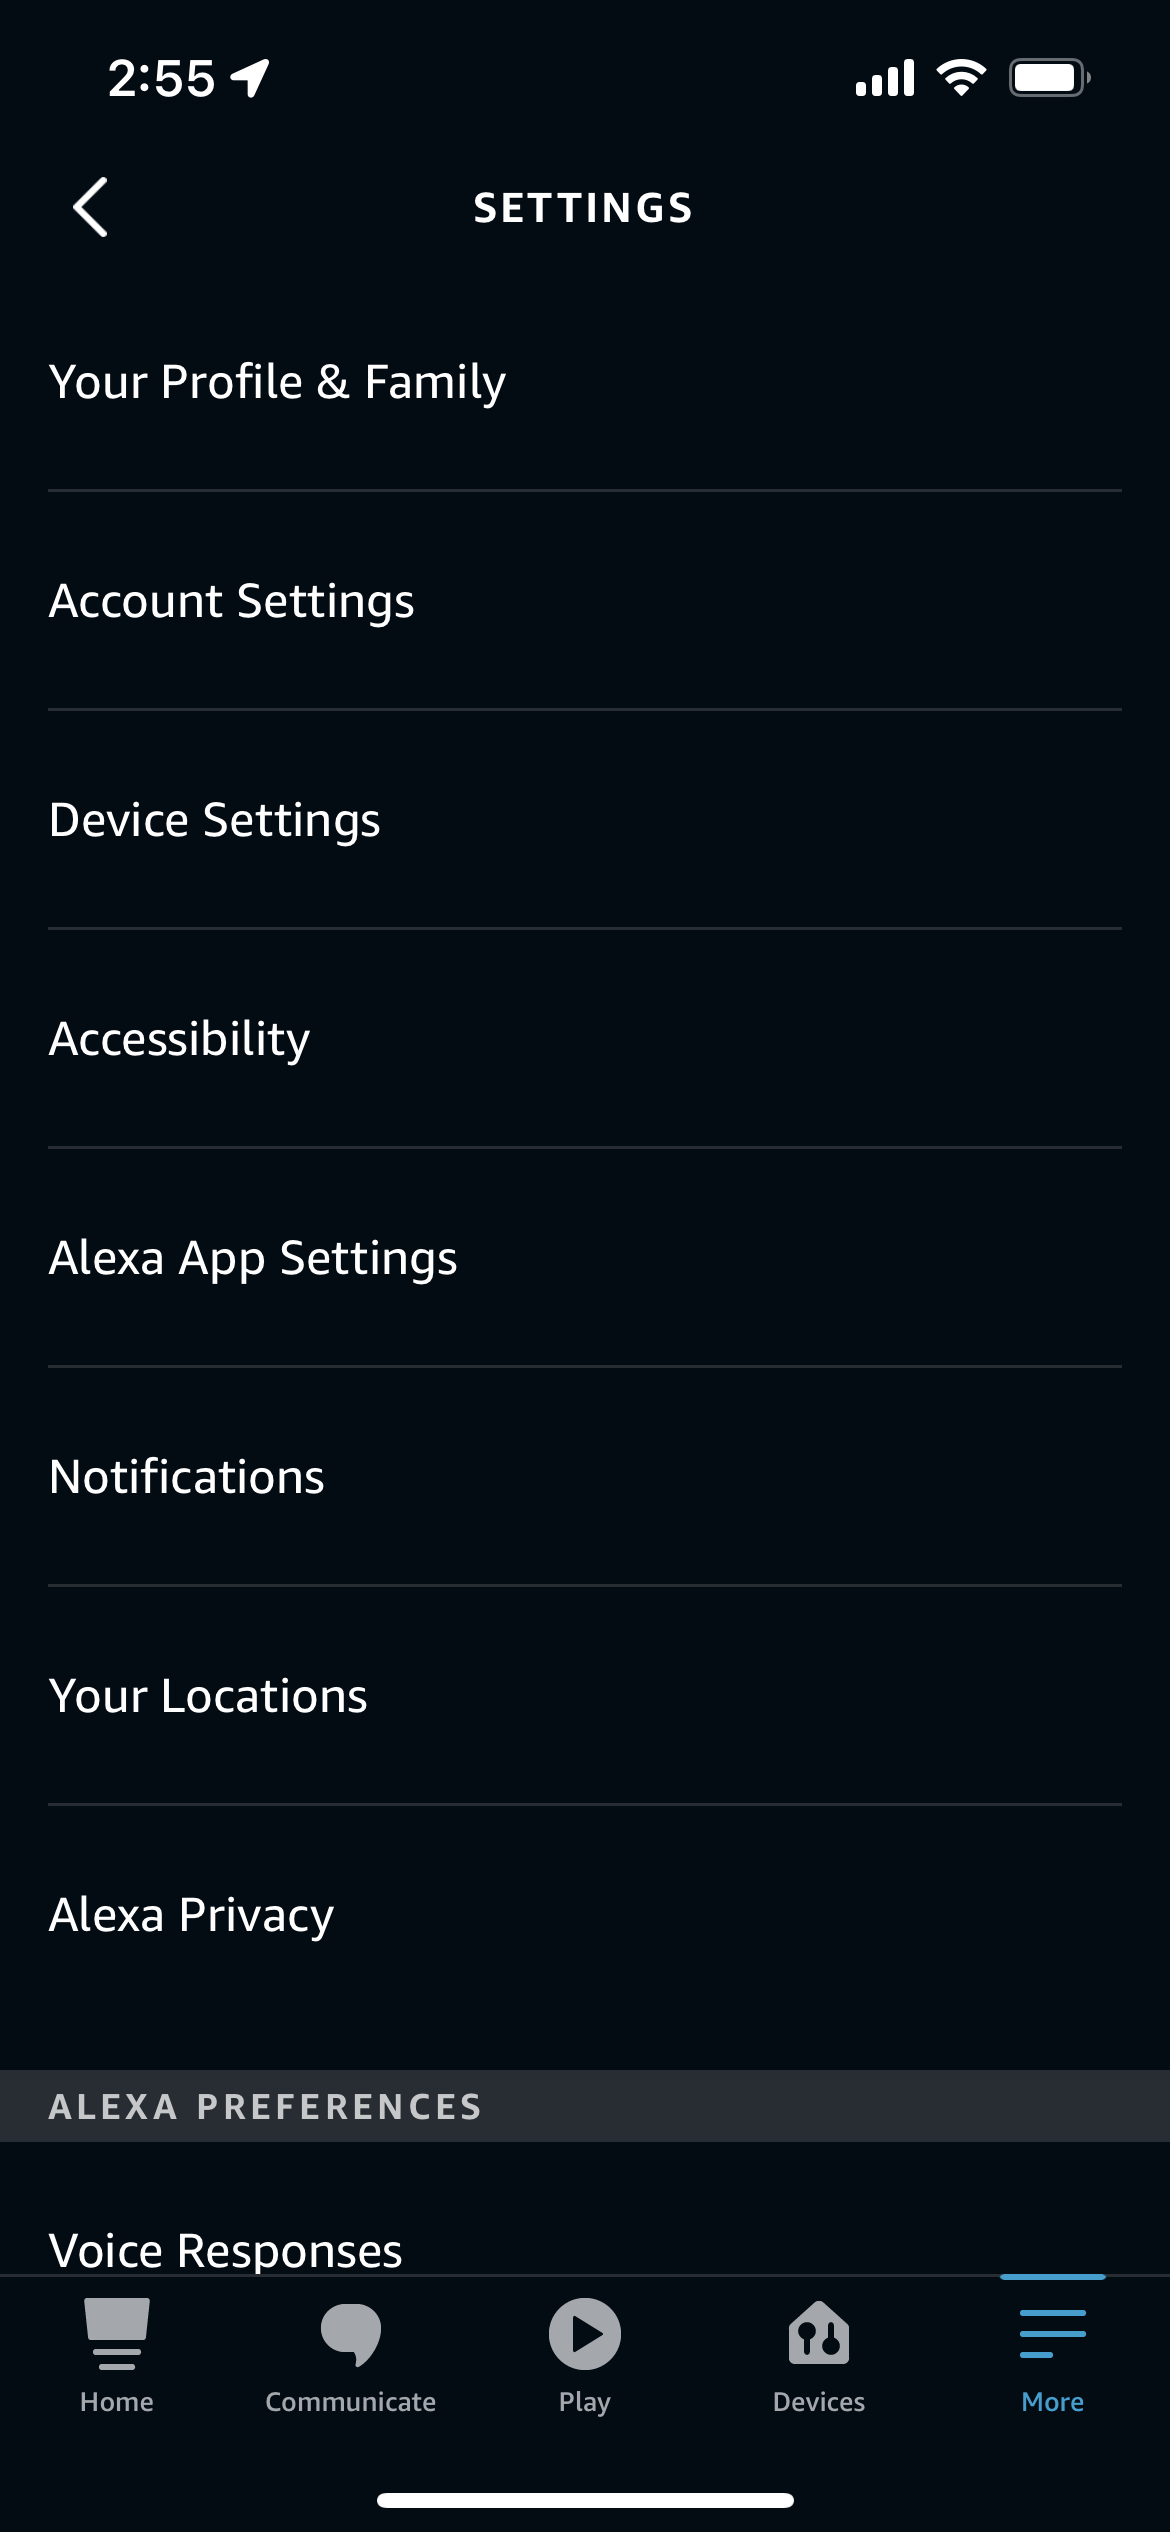 Top level settings in the Alexa app